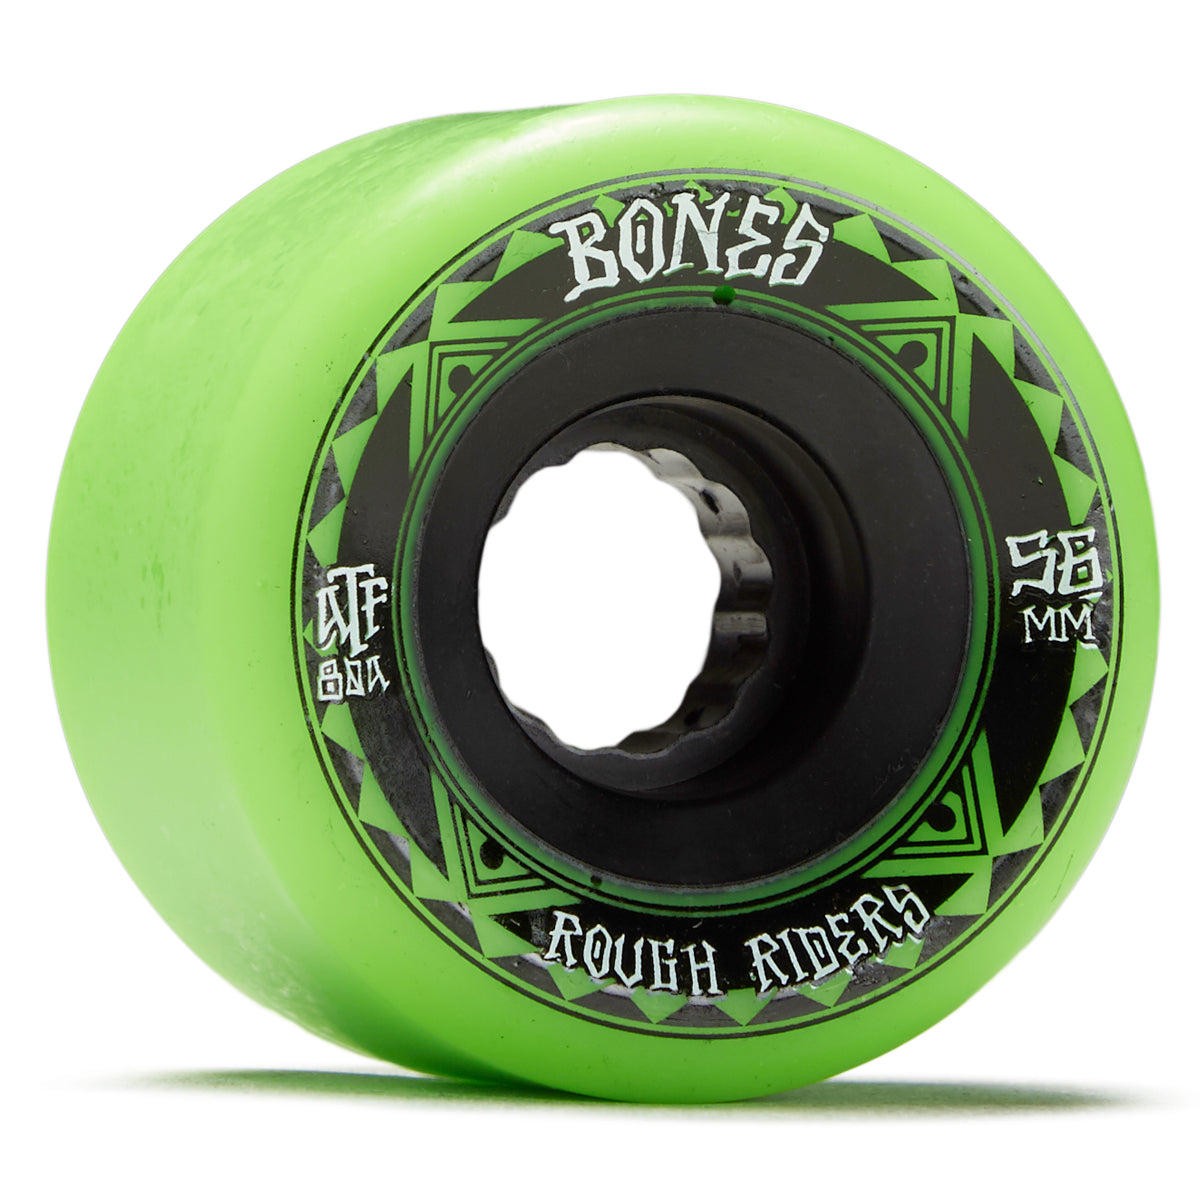 Bones Rough Riders Runners Skateboard Wheels - Green - 56mm image 1